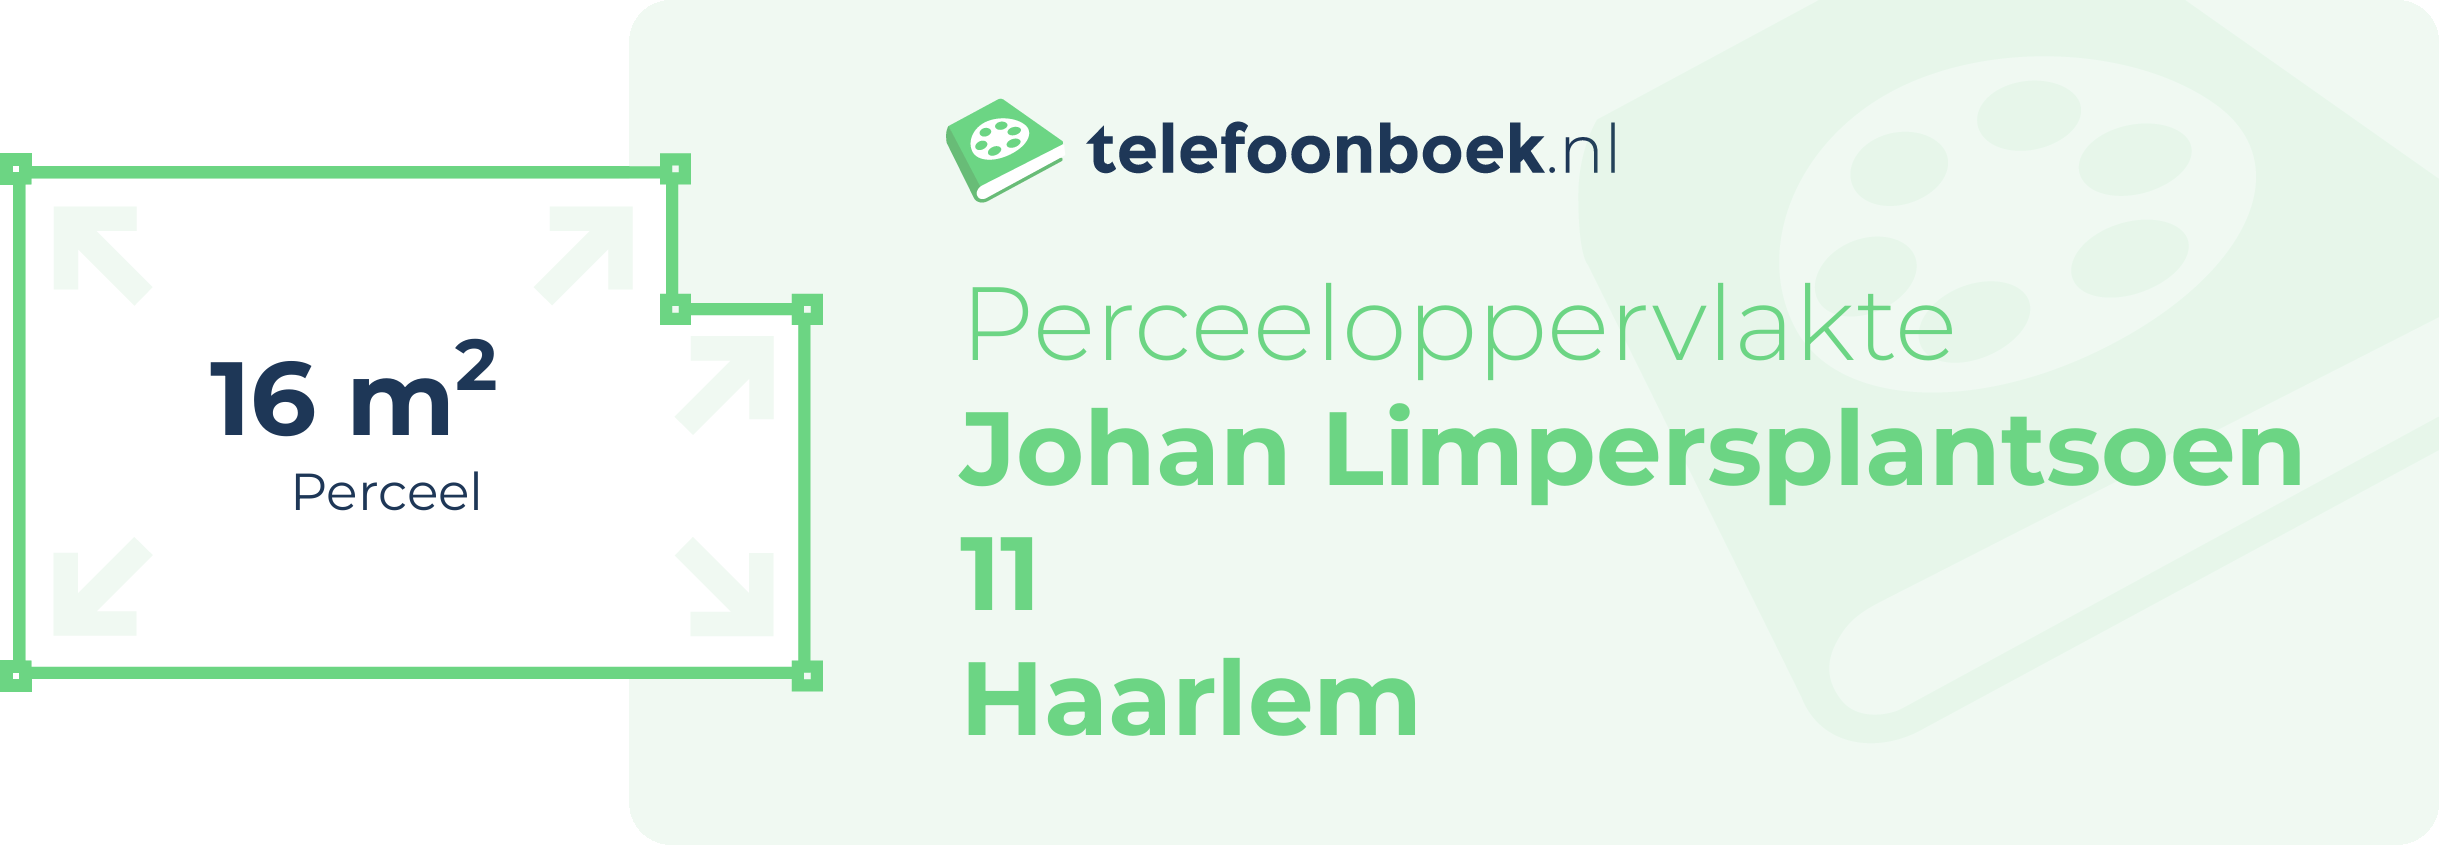 Perceeloppervlakte Johan Limpersplantsoen 11 Haarlem